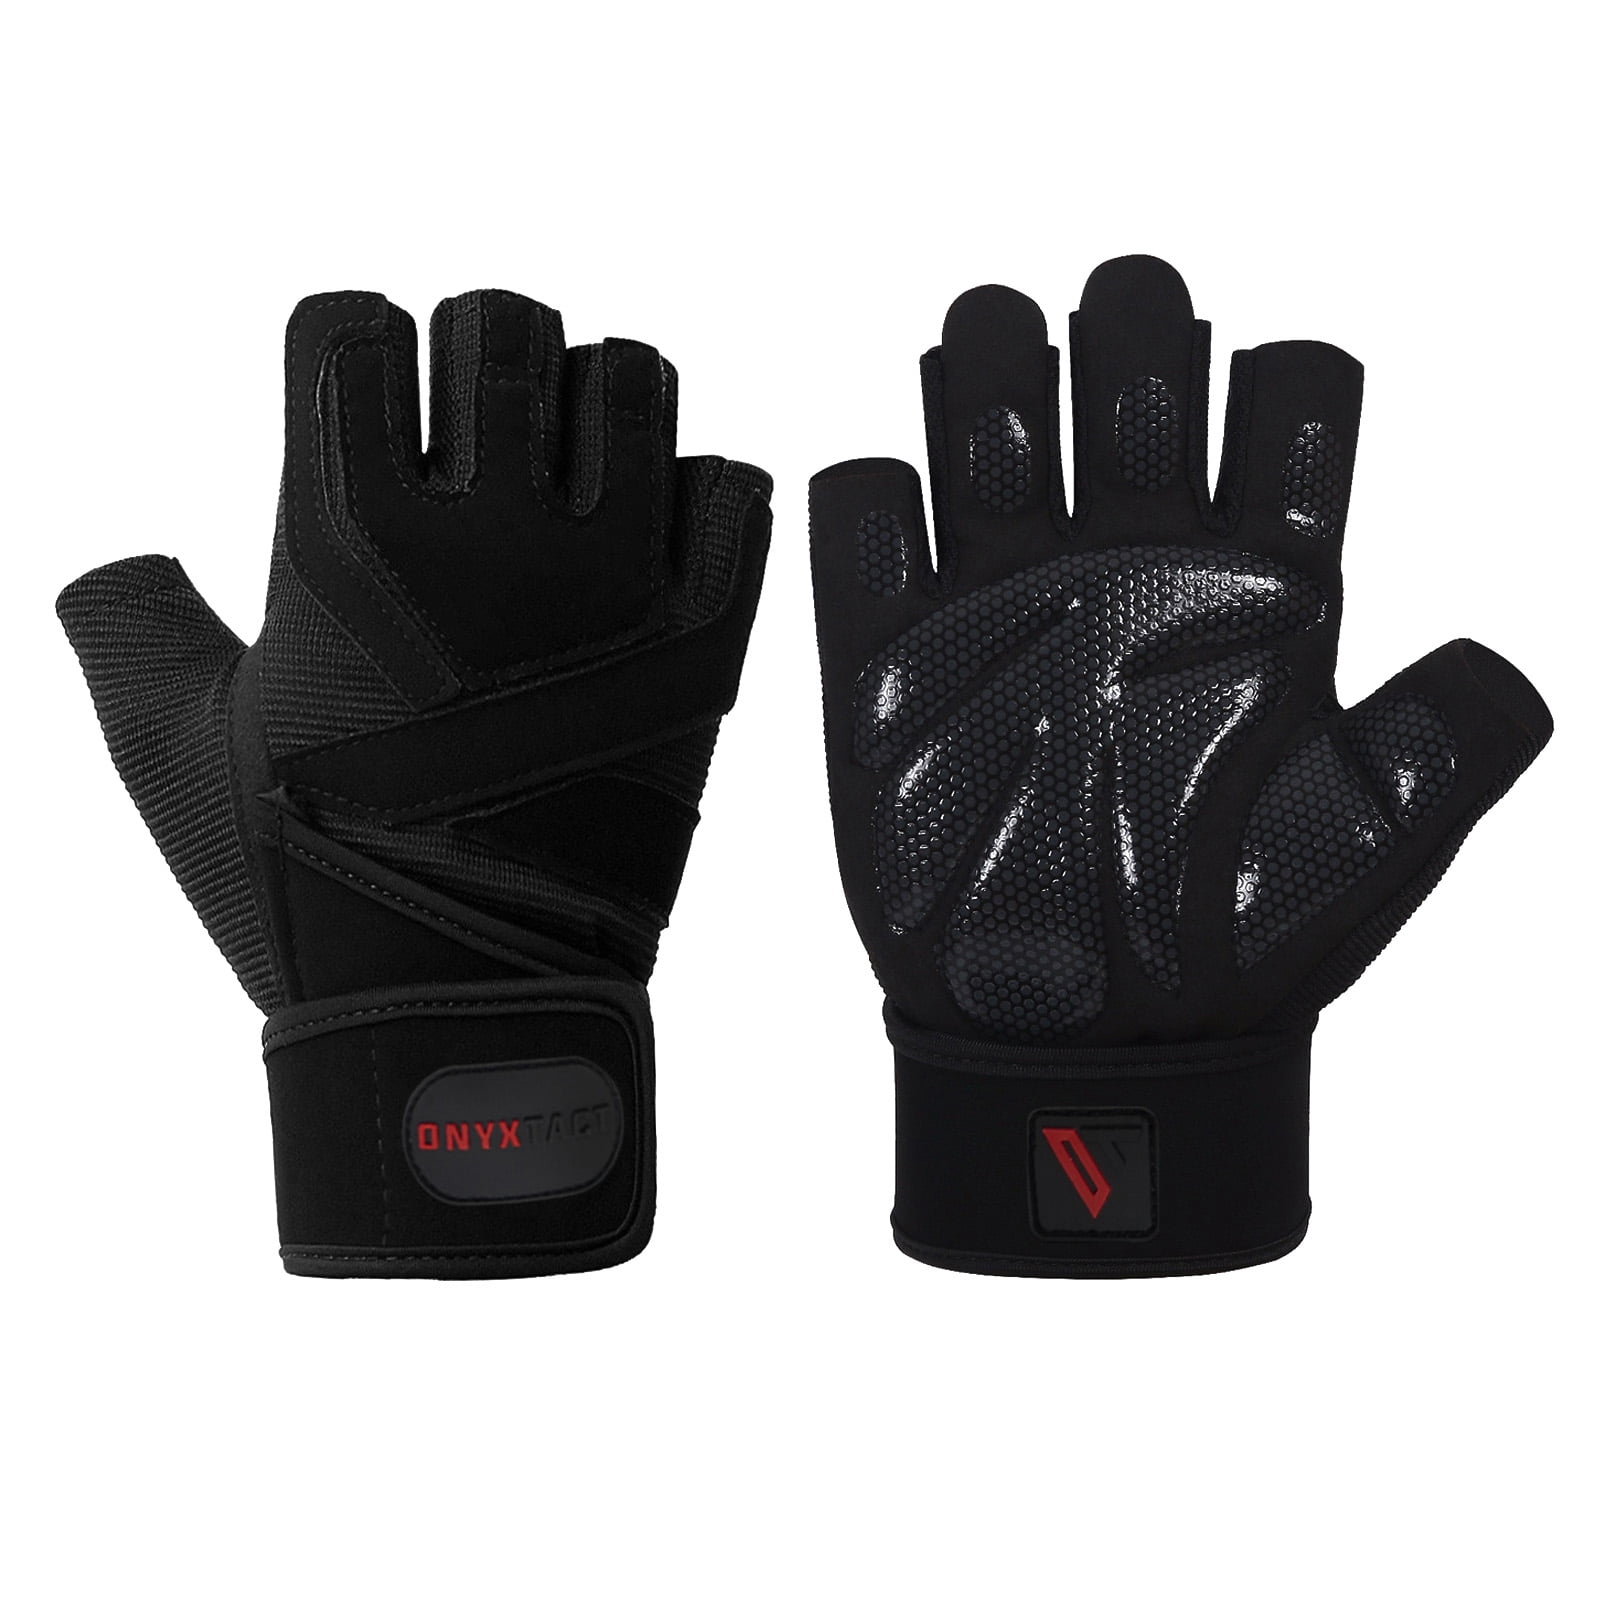 Trideer Cycling Biking Bike MTB Half Finger Gloves Black Large Silica Gel Palm 